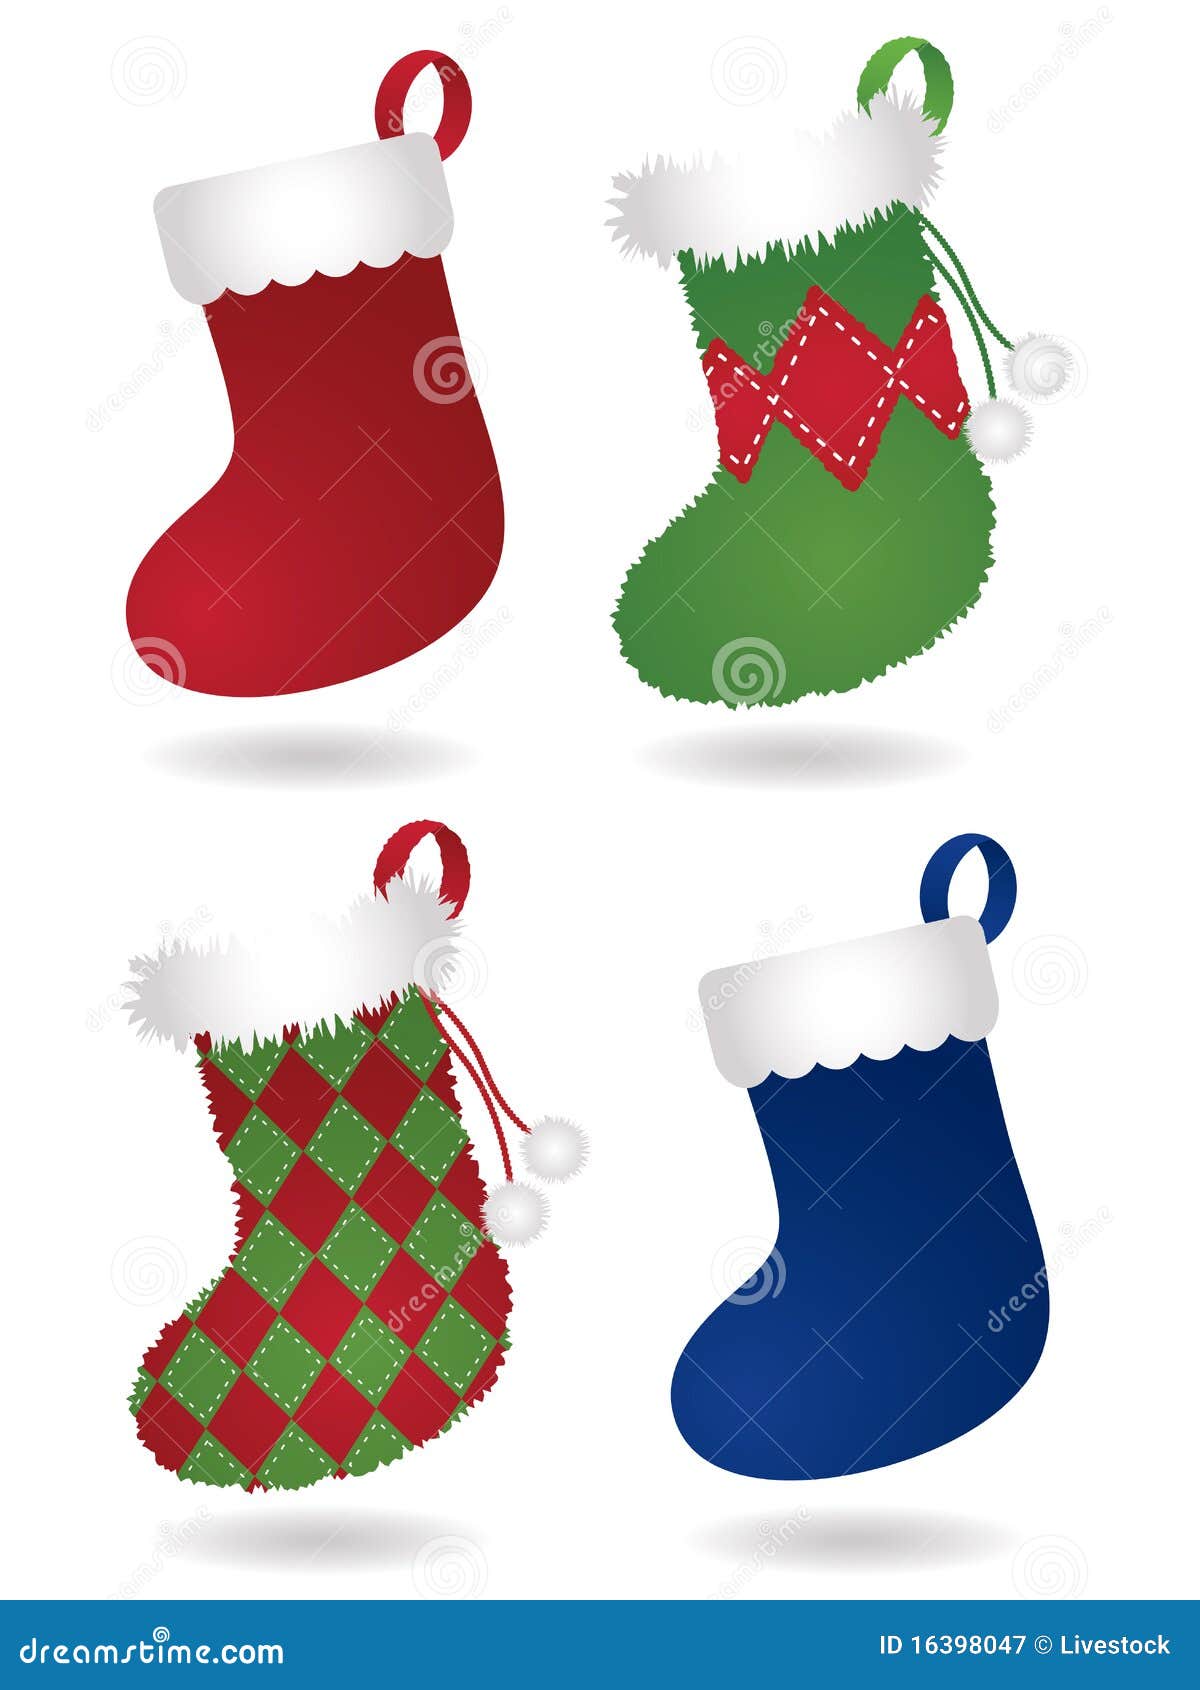 Decorative Christmas Stockings Royalty Free Stock Photography - Image ...